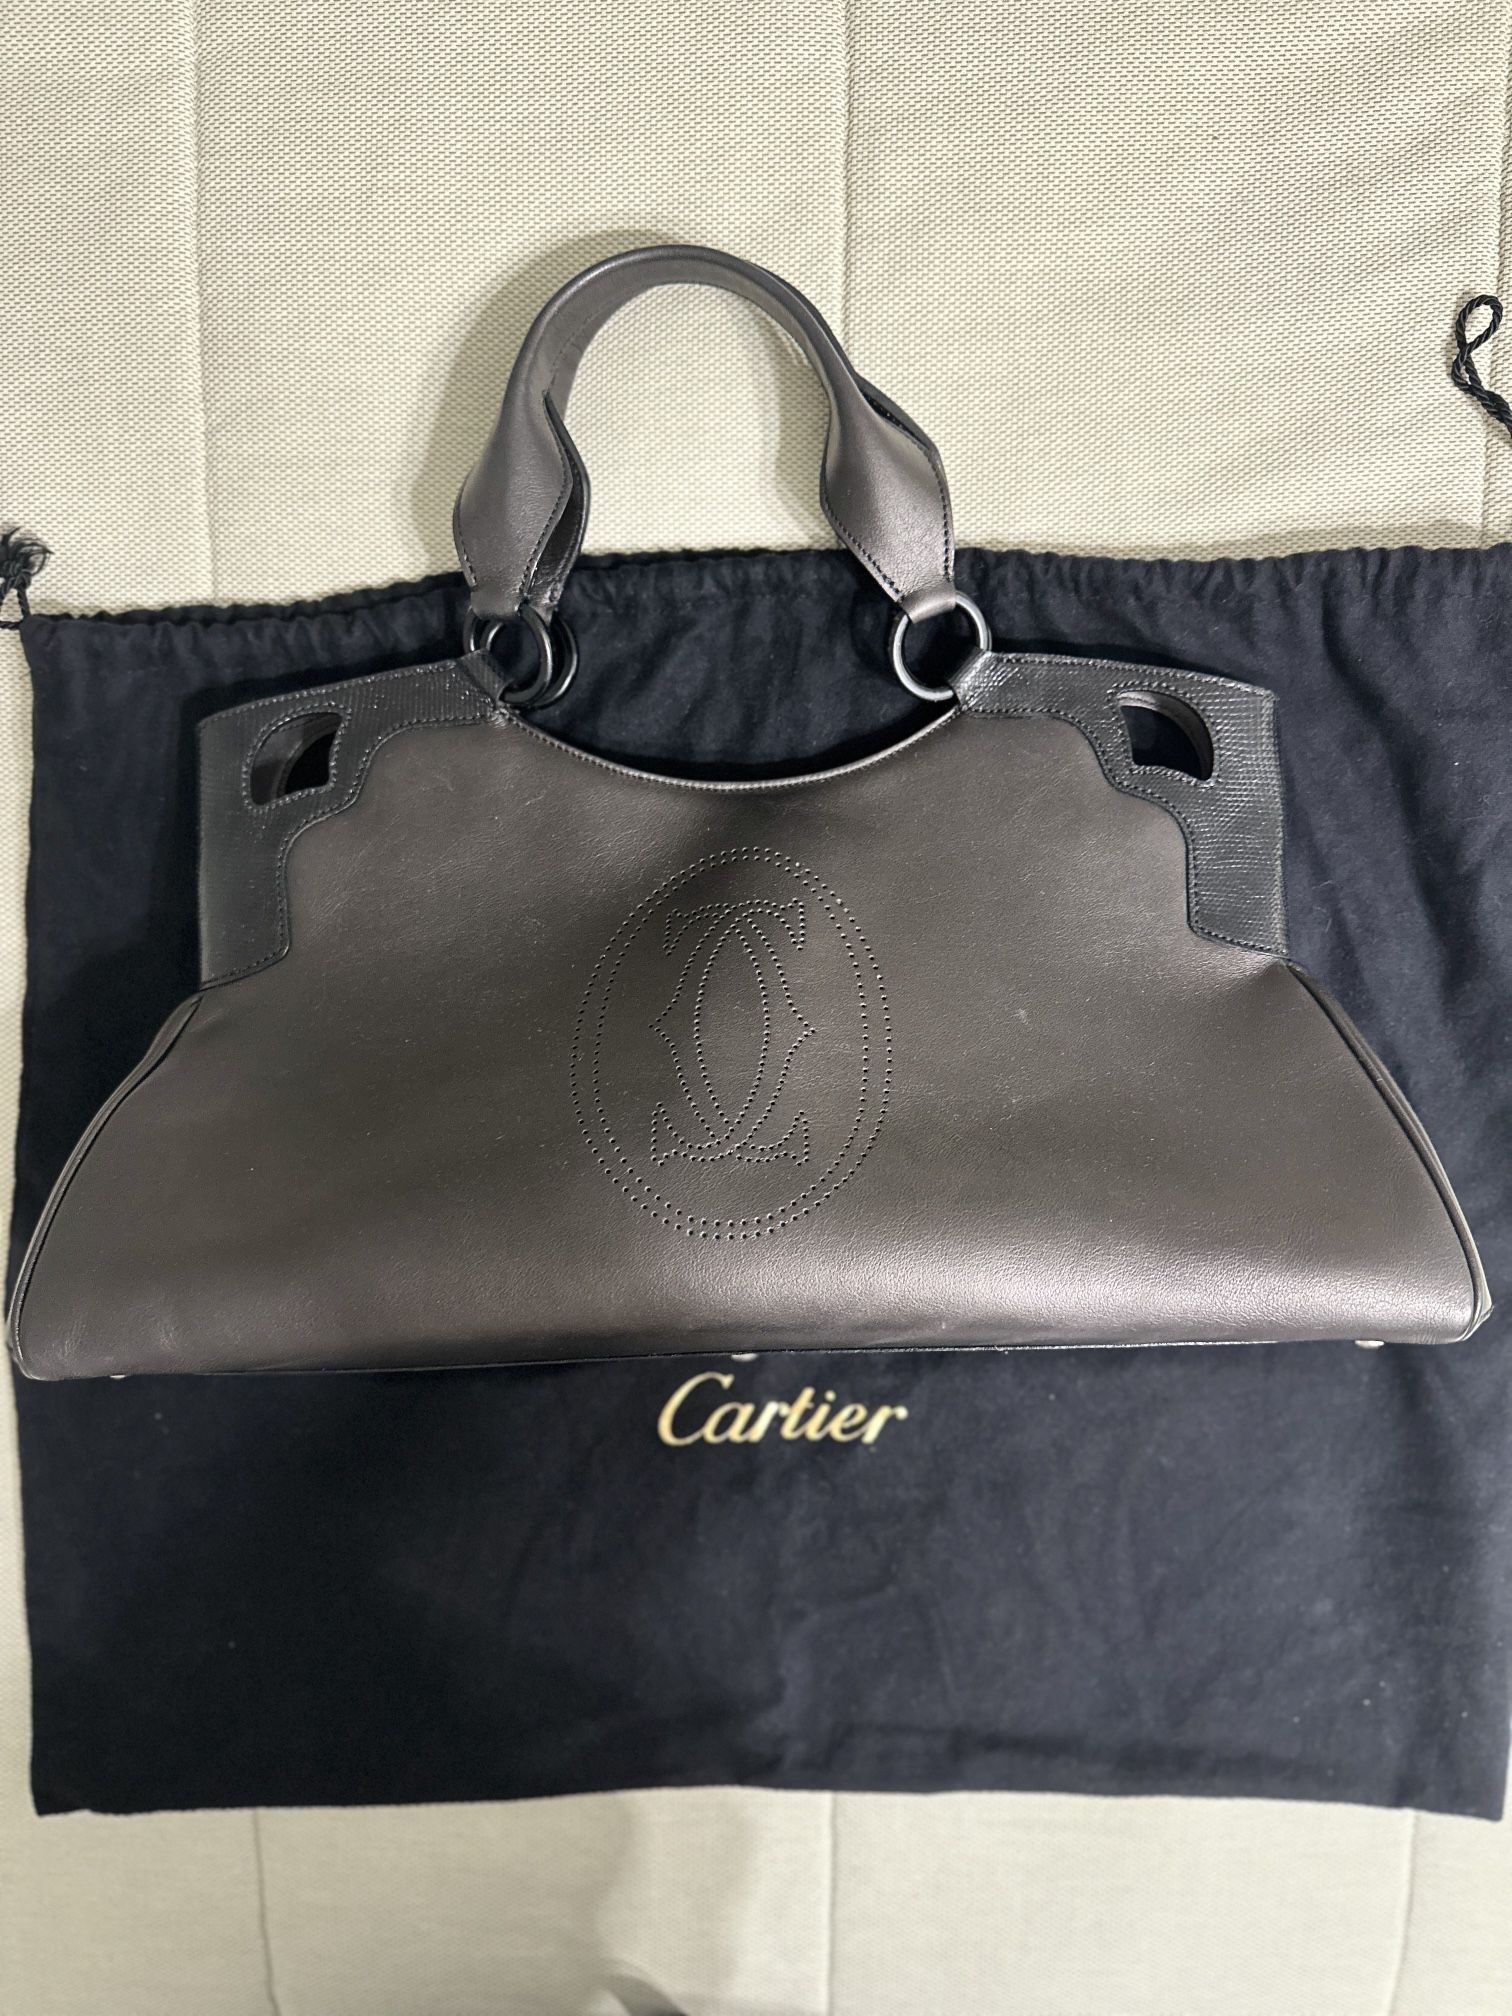 Cartier Purse $459